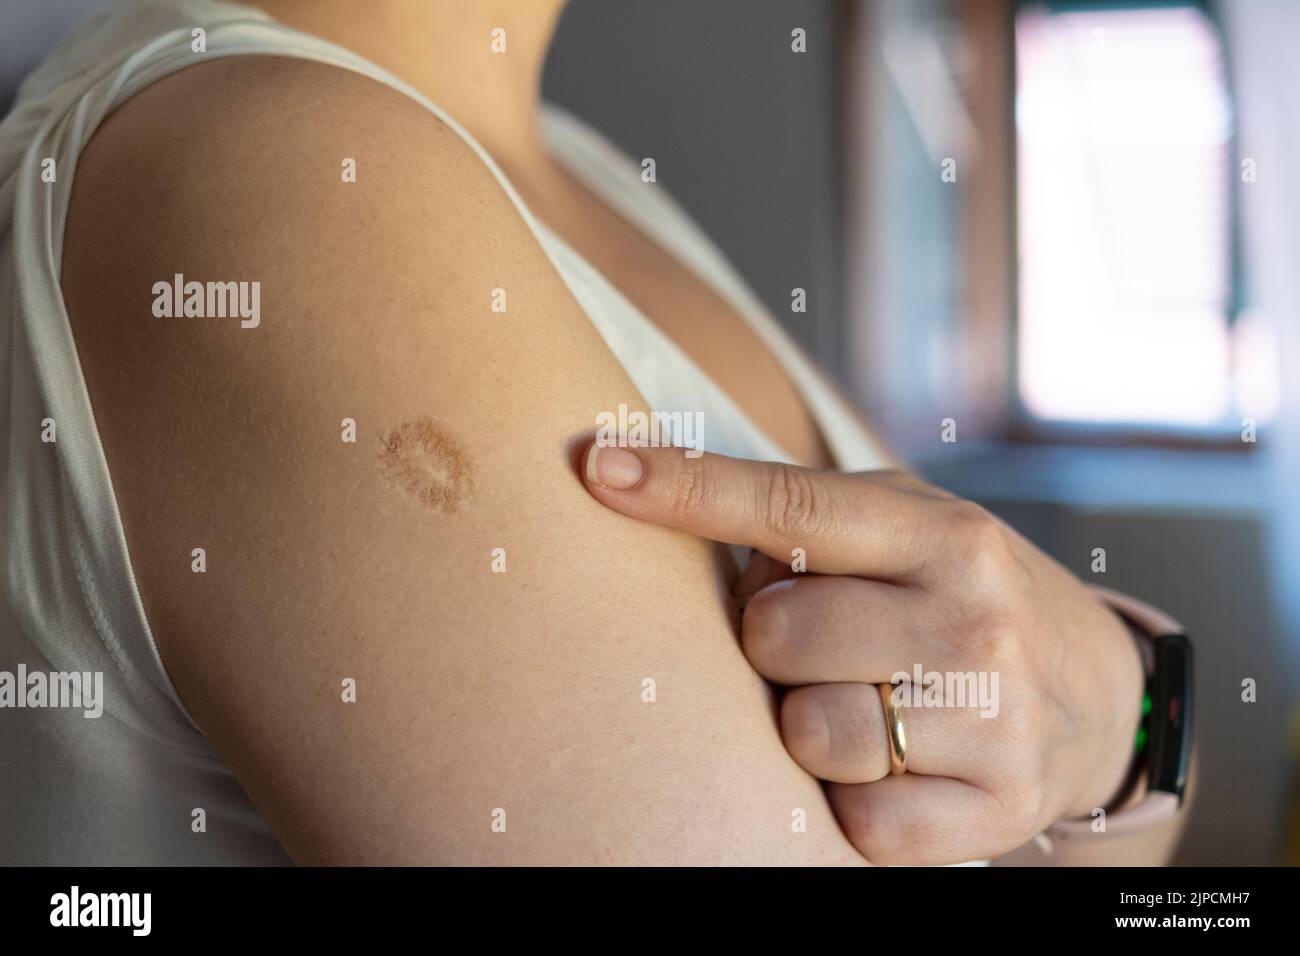 Monkeypox and smallpox vaccine concept: woman shows smallpox vaccine scar on her arm Stock Photo